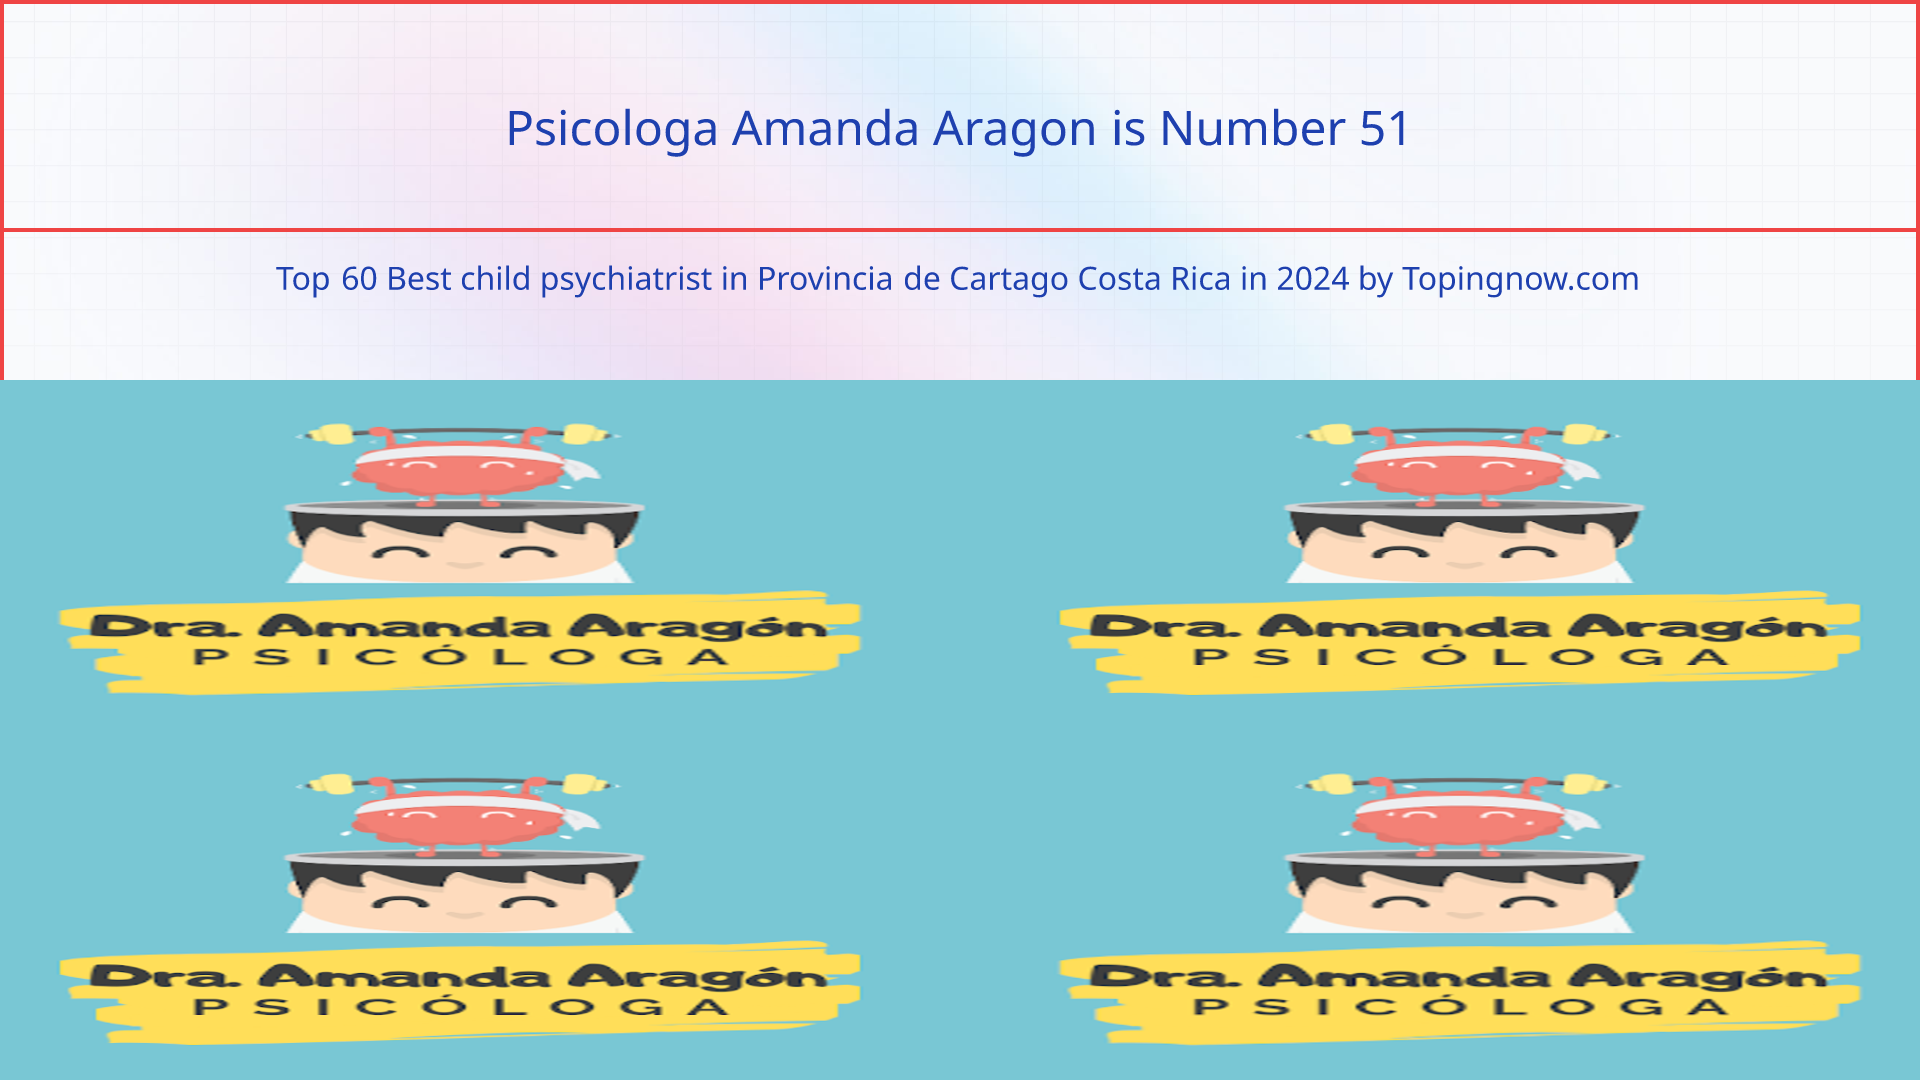 Psicologa Amanda Aragon: Top 60 Best child psychiatrist in Provincia de Cartago Costa Rica in 2024